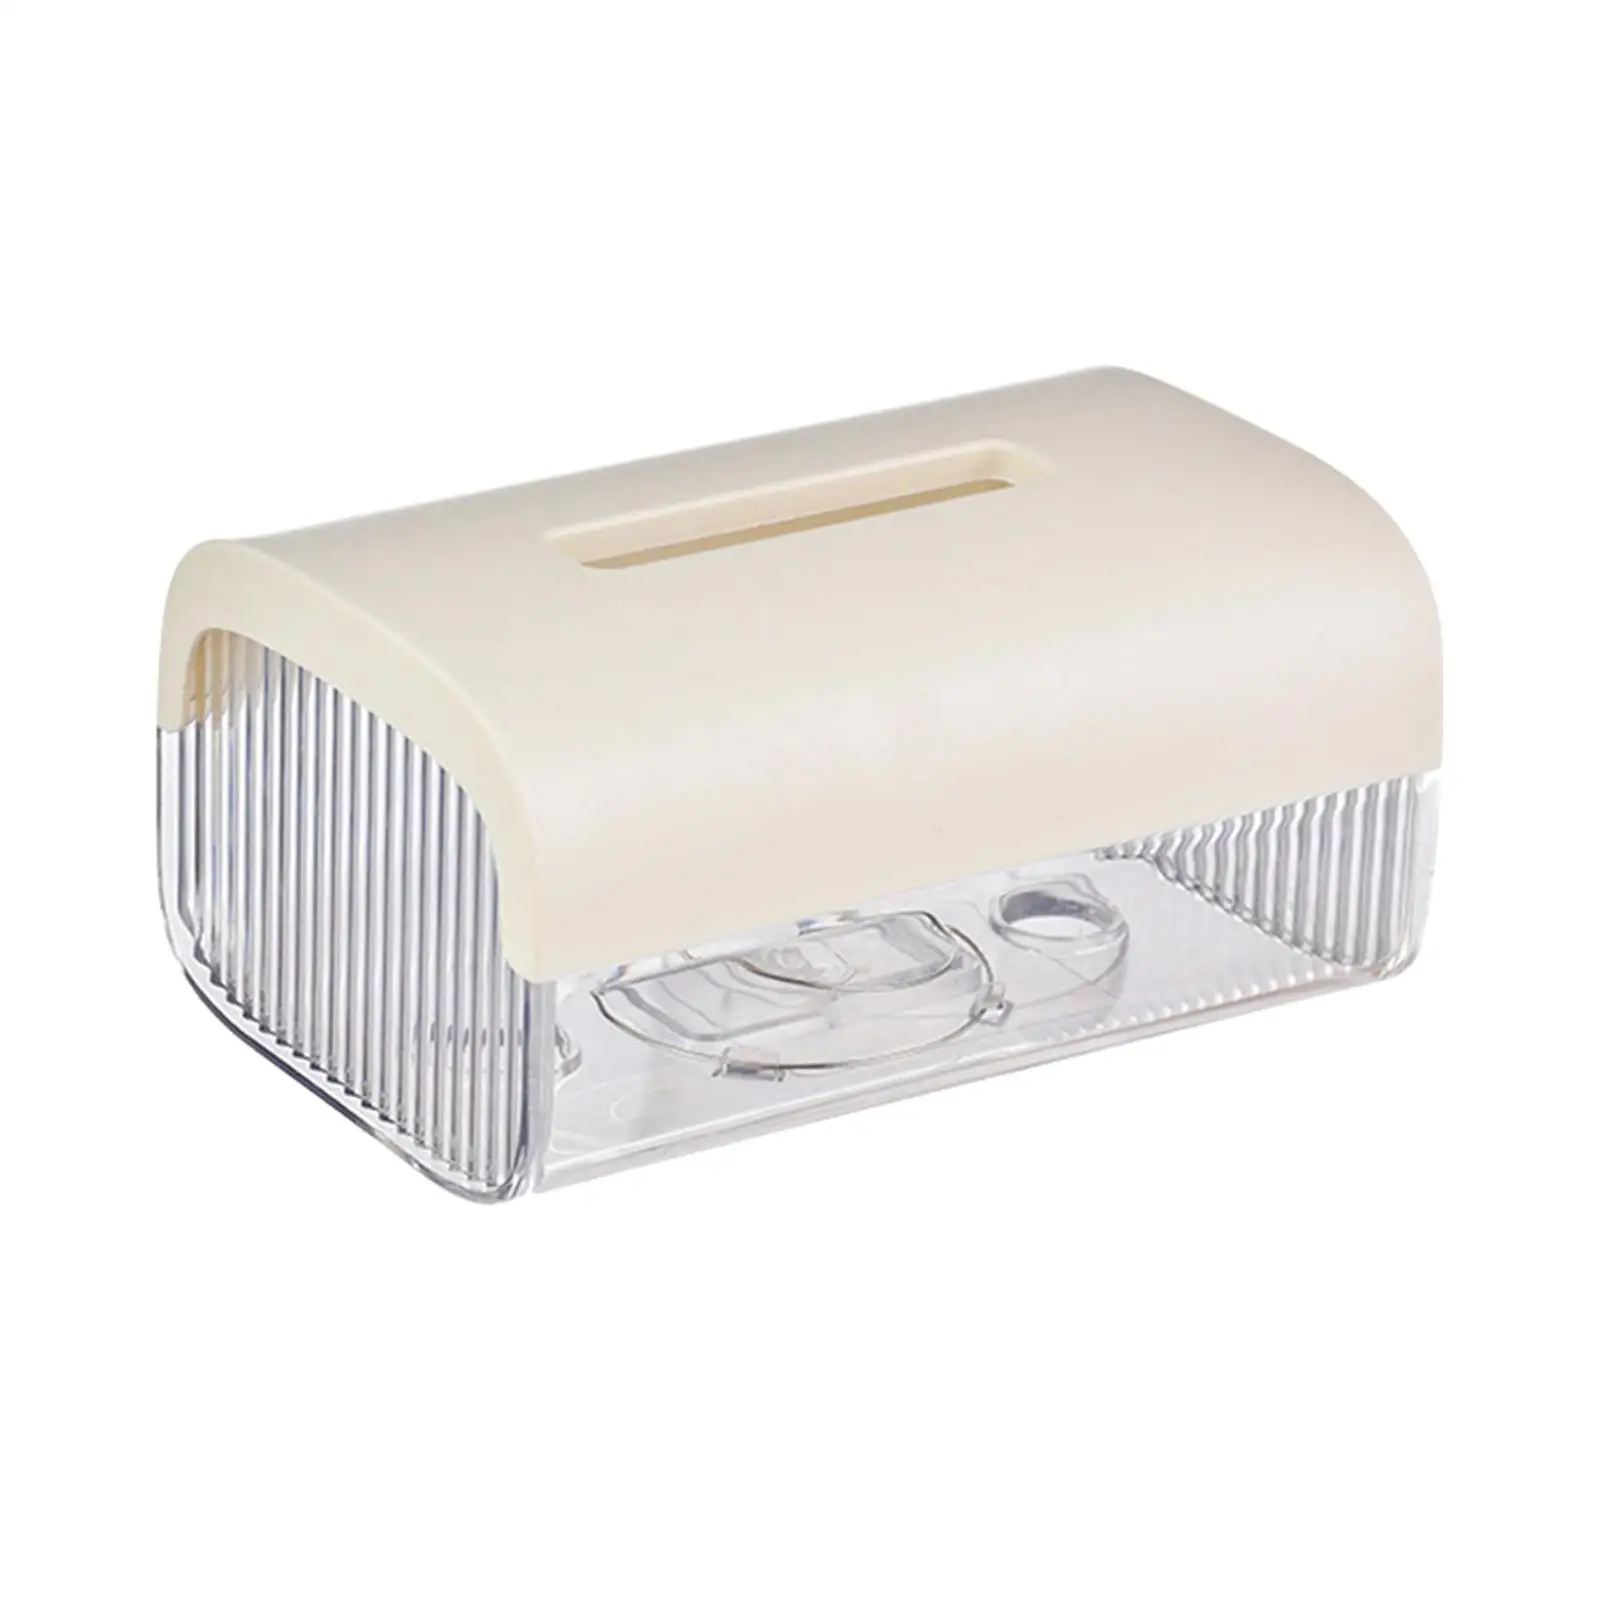 Bathroom Facial Napkin Box Holders Adhesive Bathroom Tissue Dispenser Box for Desk